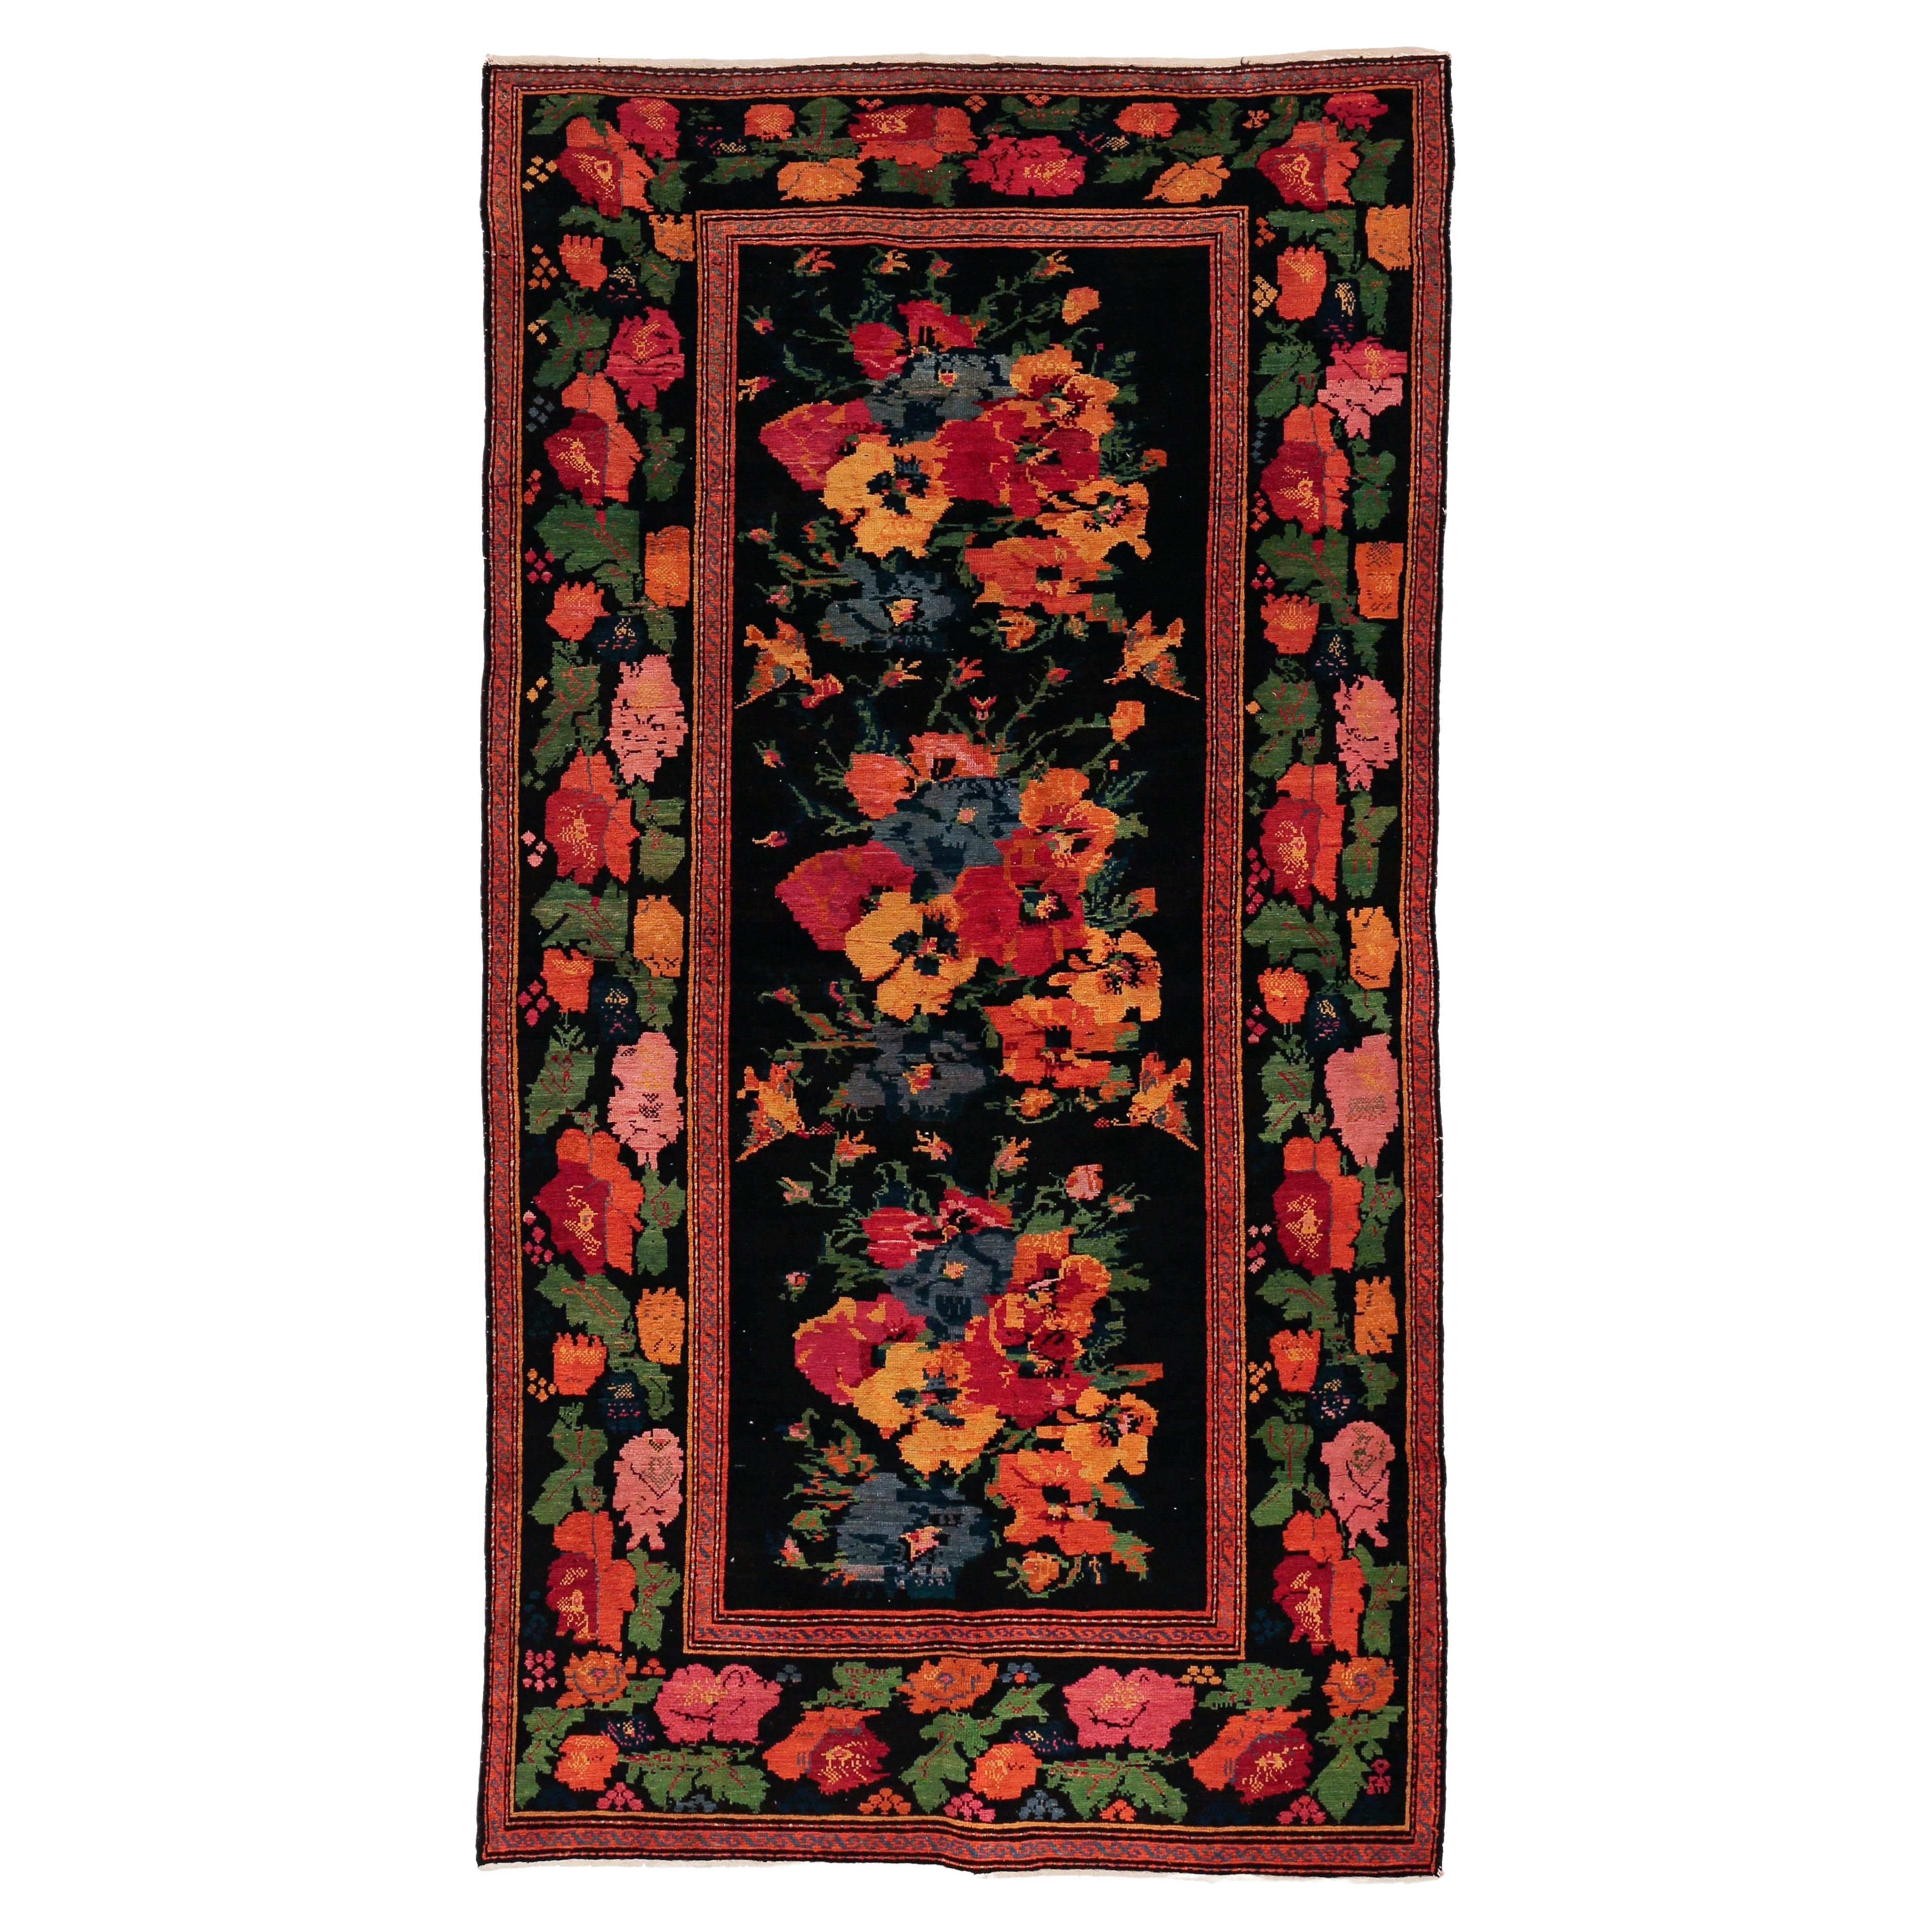 Kaukasischer geblümter Qarabagh-Teppich im St. Petersburger Stil